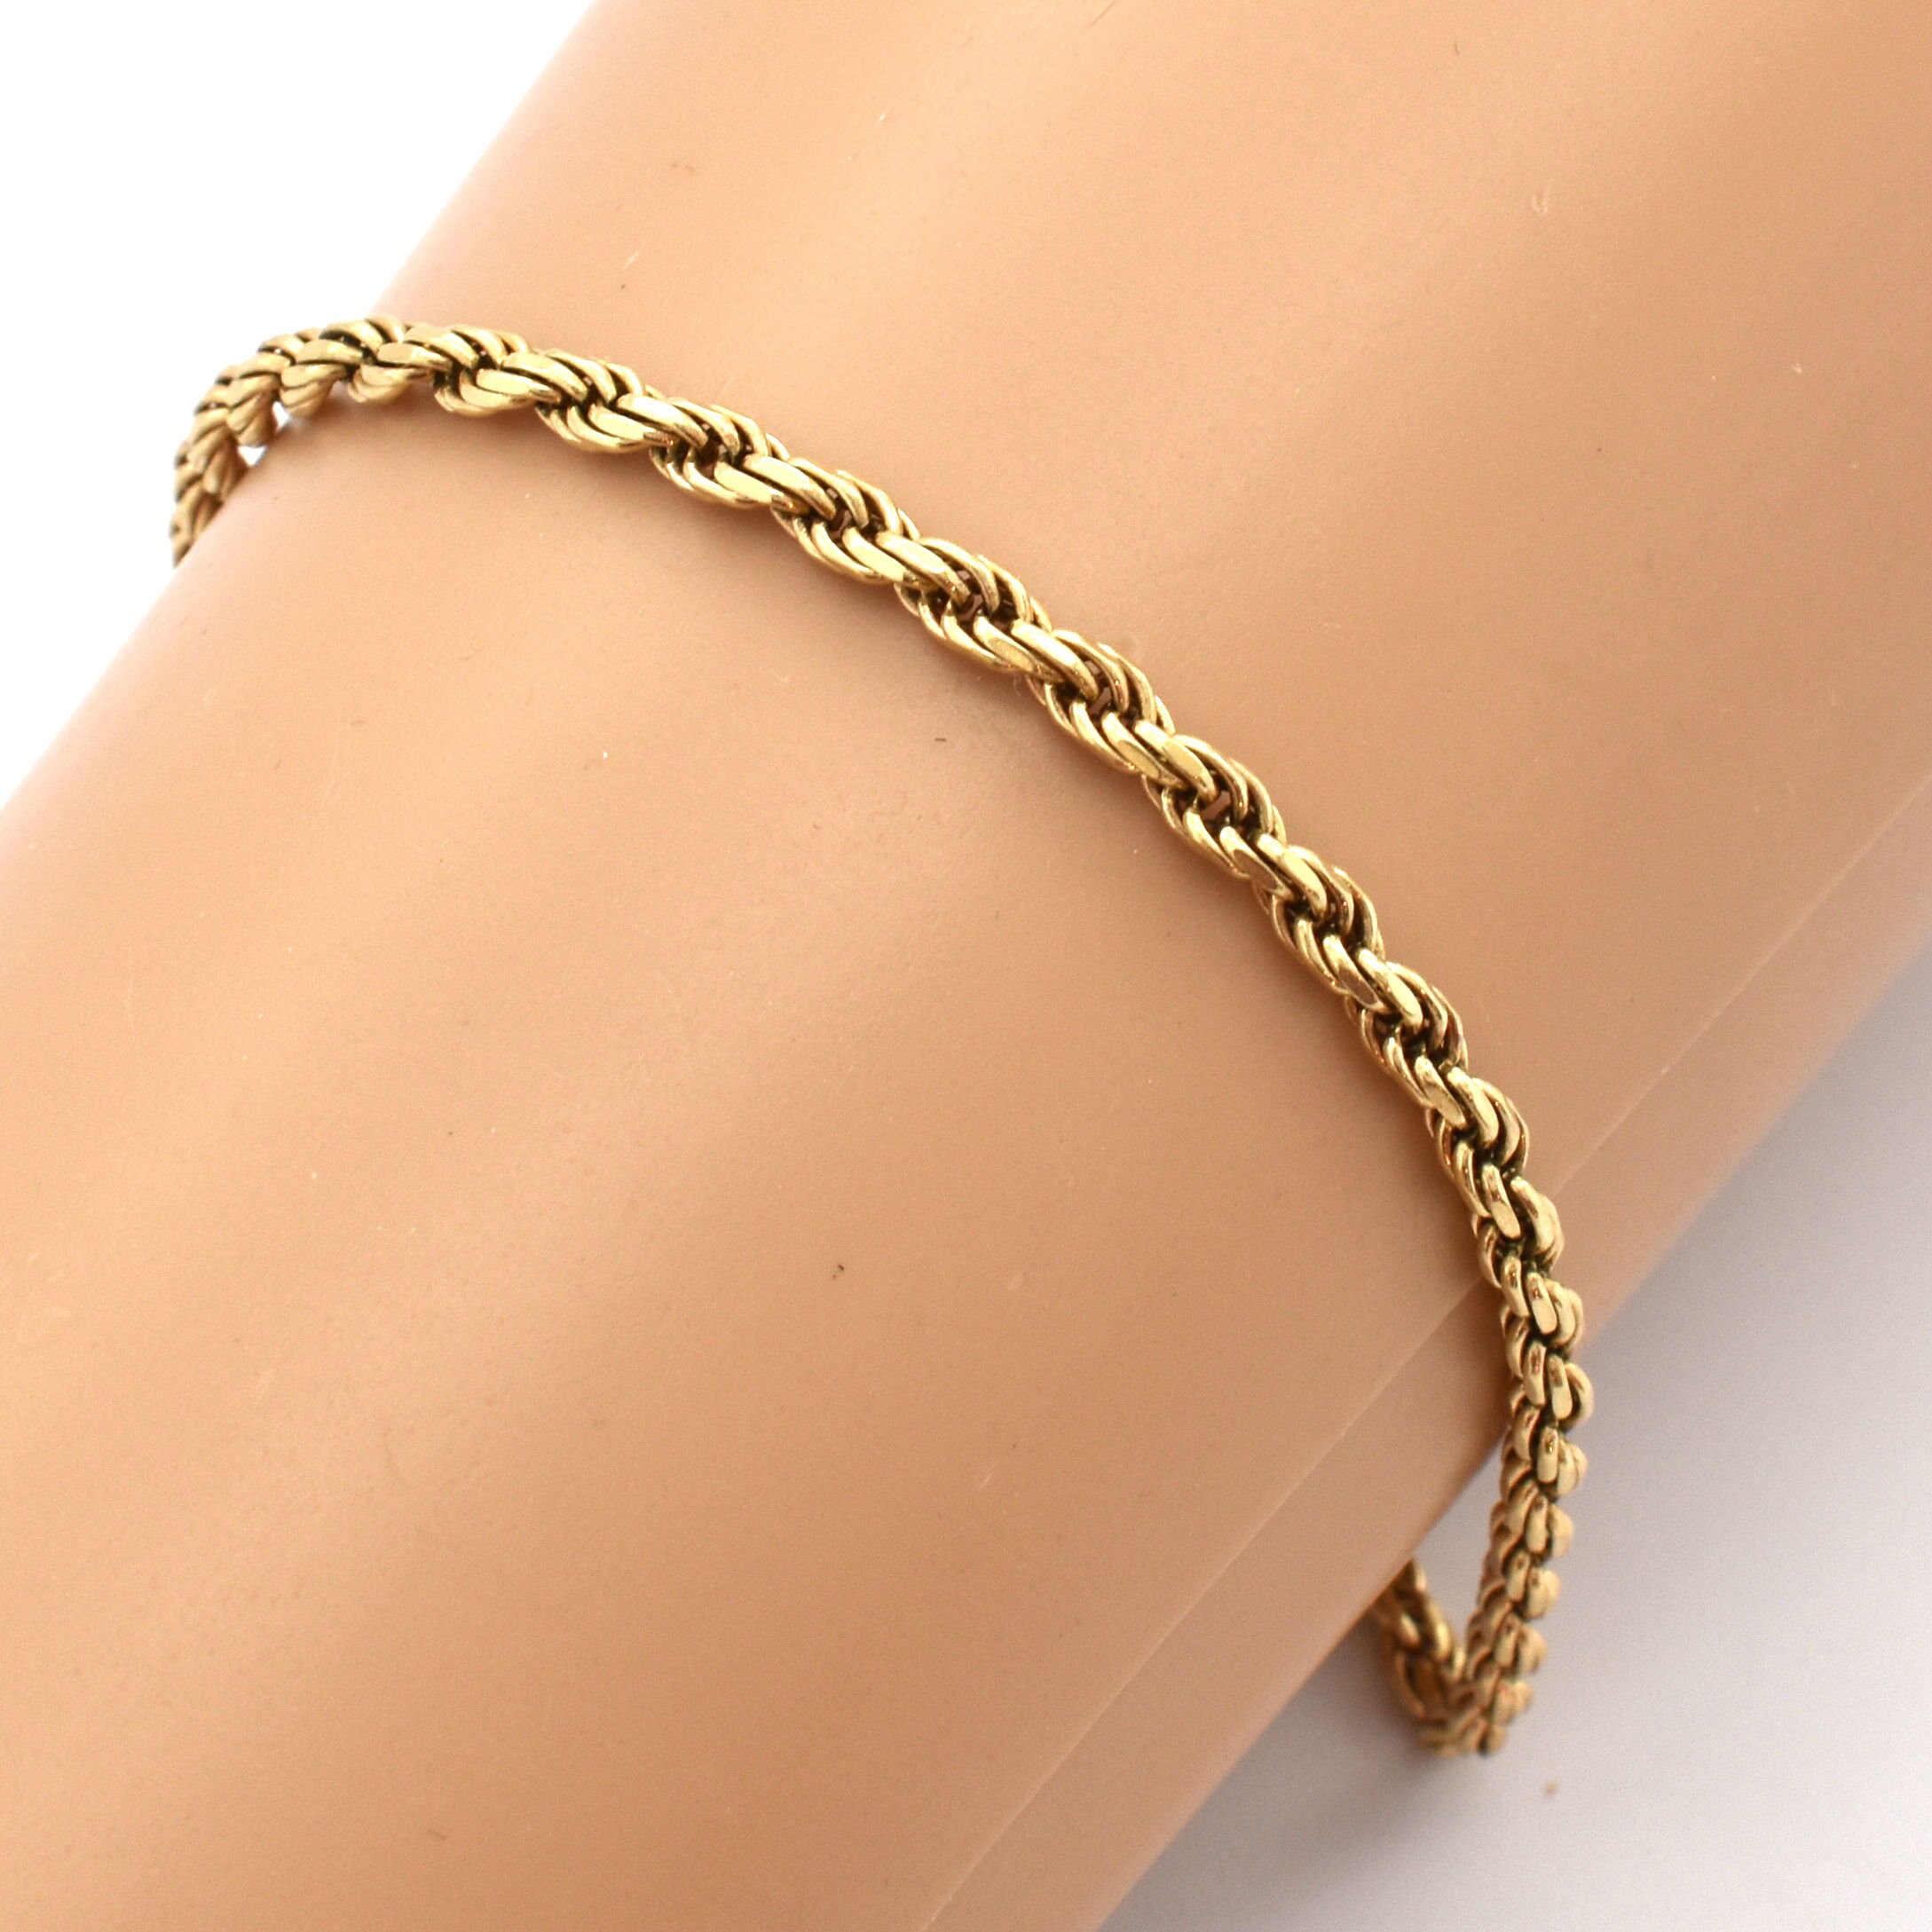 Twisted rope design bracelet in gold and platinum color 